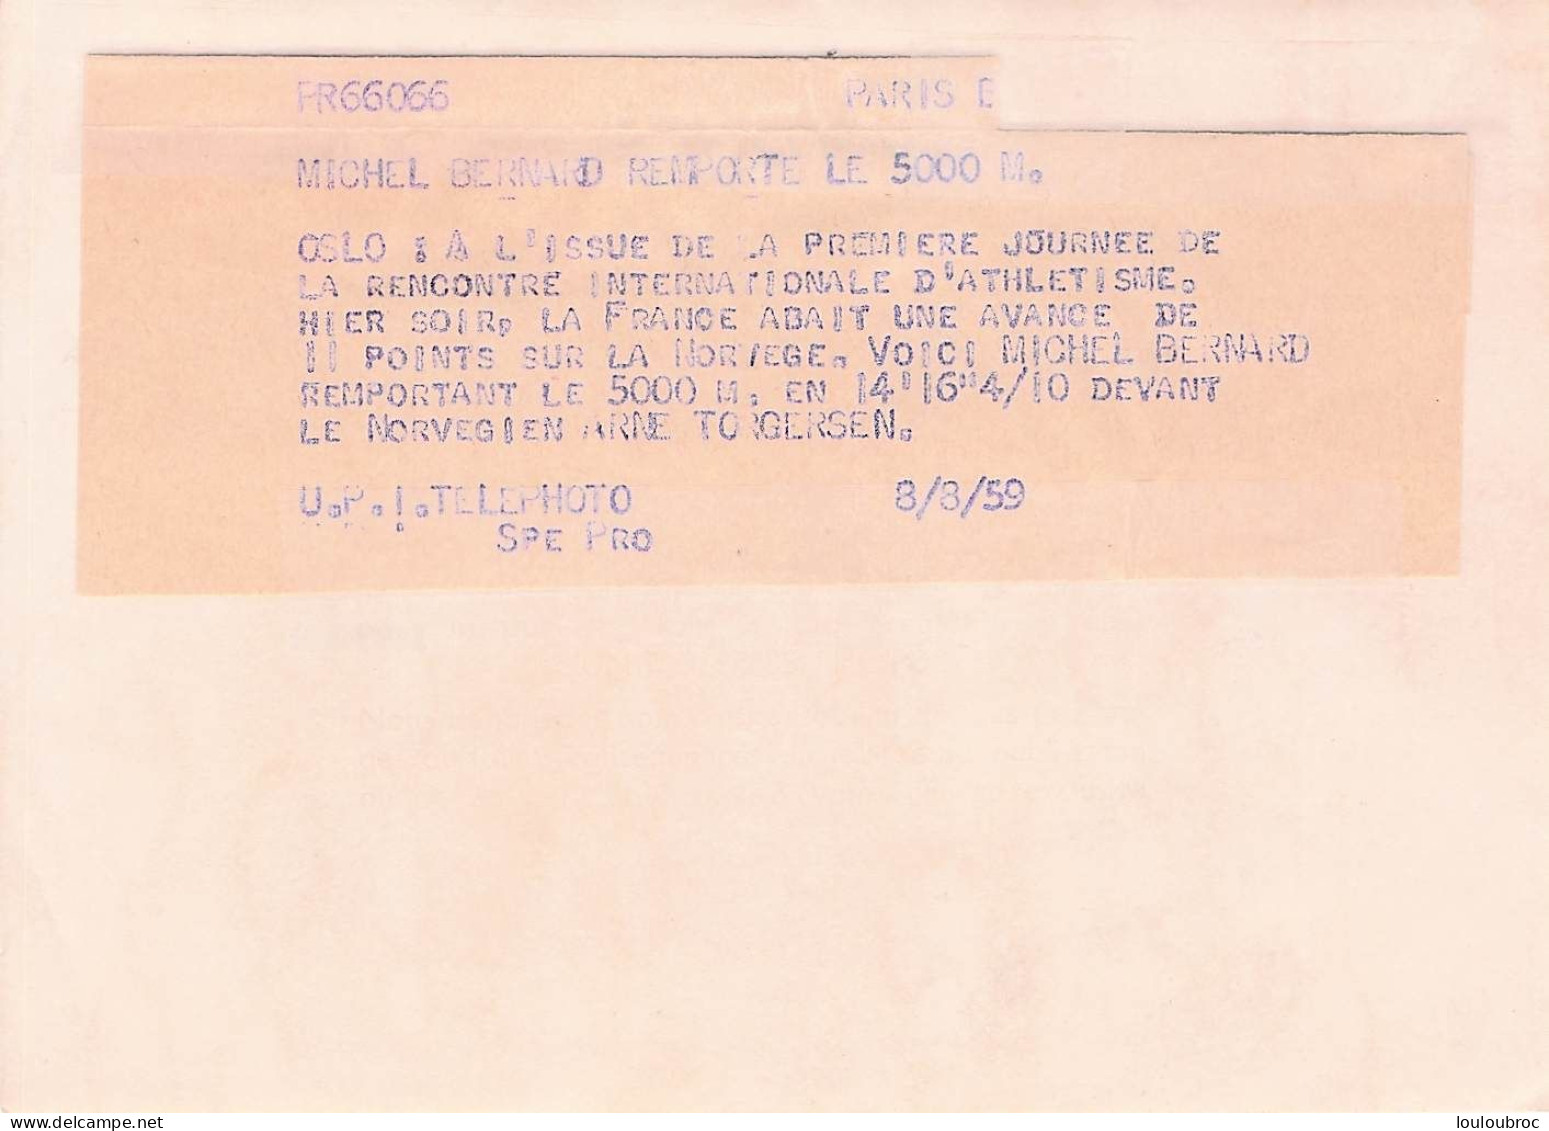 ATHLETISME 08/1959 OSLO MICHEL BERNARD REMPORTE LE 5000 METRES DEVANT TORGERSEN PHOTO 18 X 13 CM - Sports